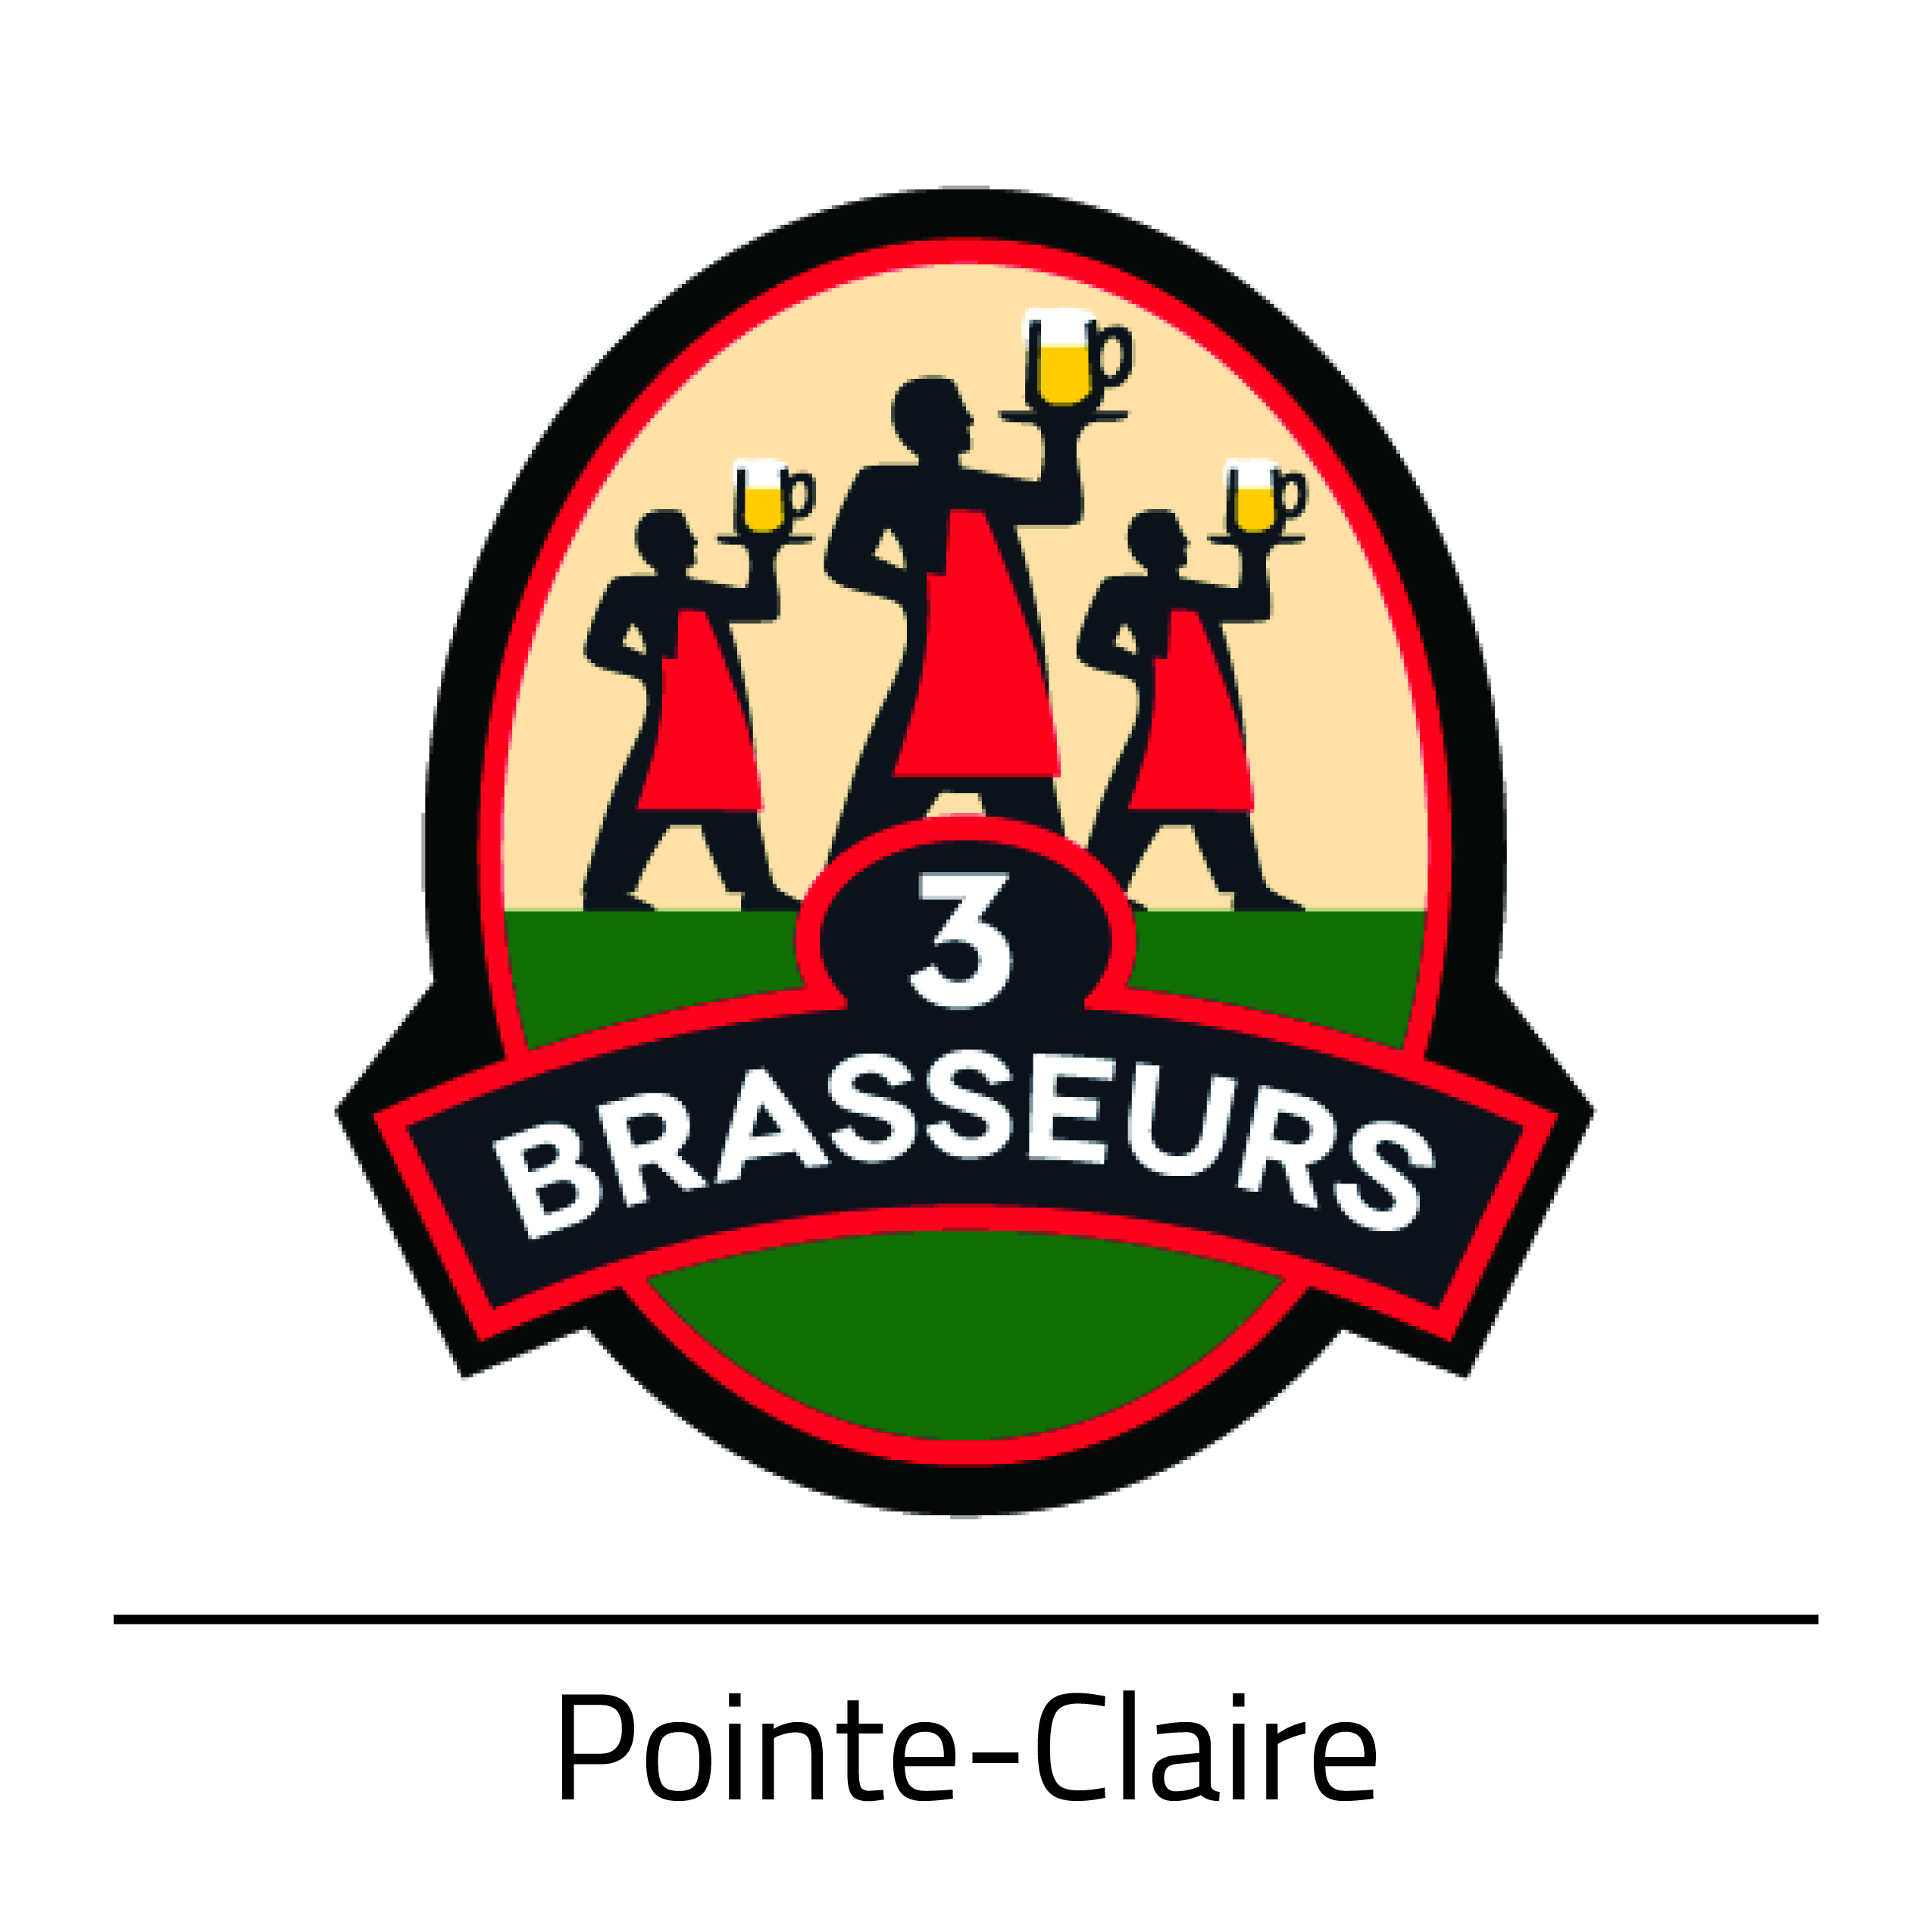 3 Brasseurs Pointe-Claire